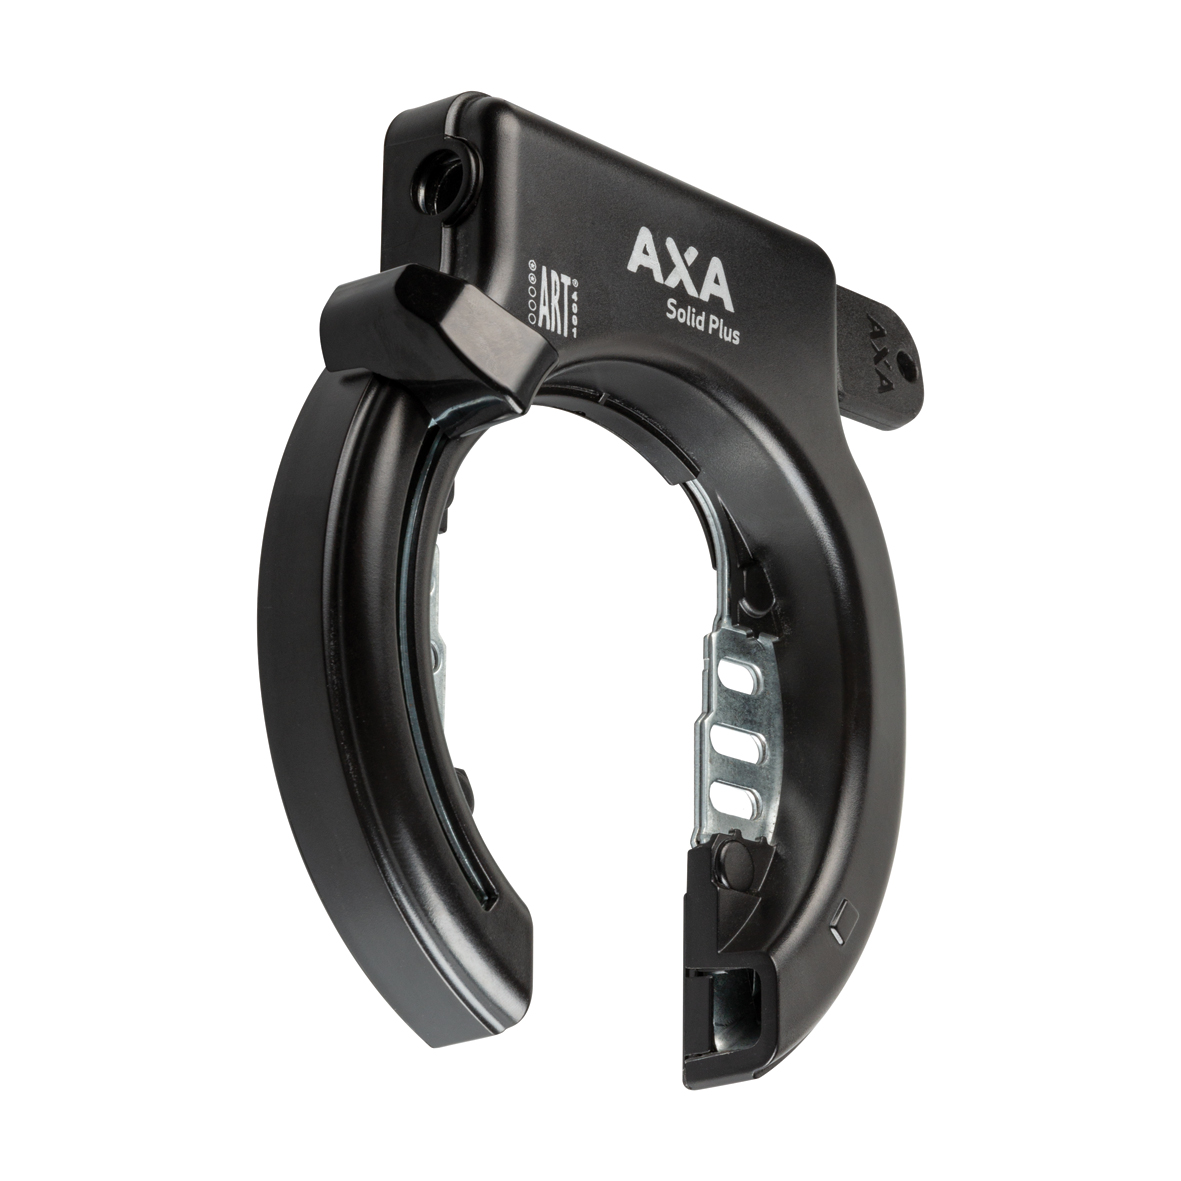 Antivol Vélo Intégré AXA Solid Plus + câble sur mes-velos